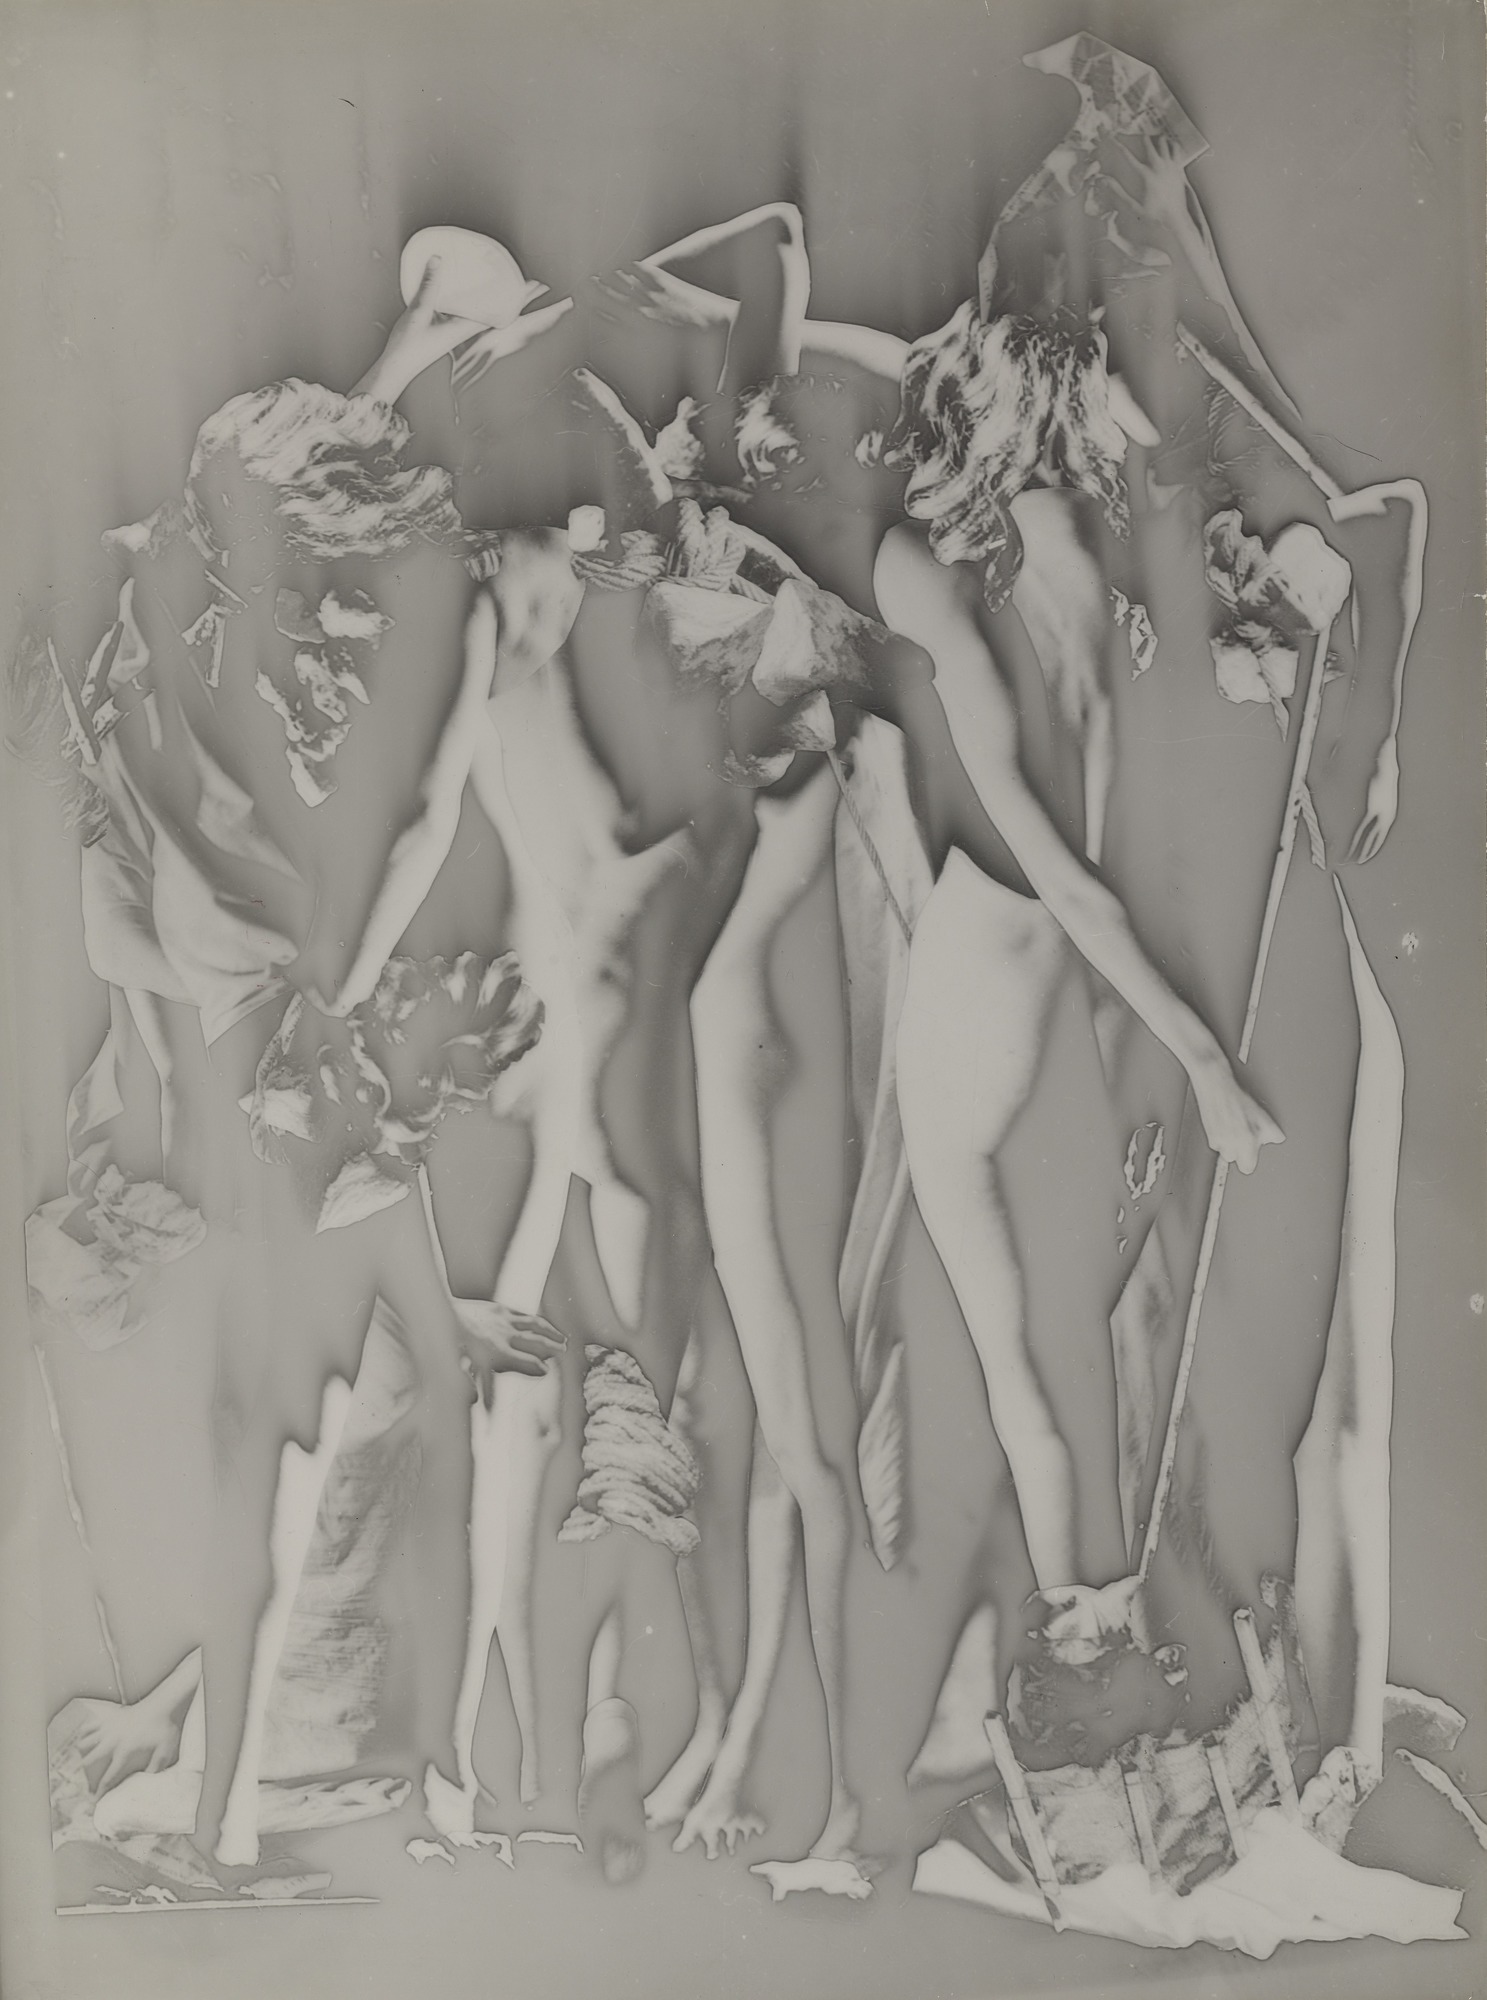 Raoul Ubac, The Secret Gathering, 1938, gelatin silver print (MoMA)